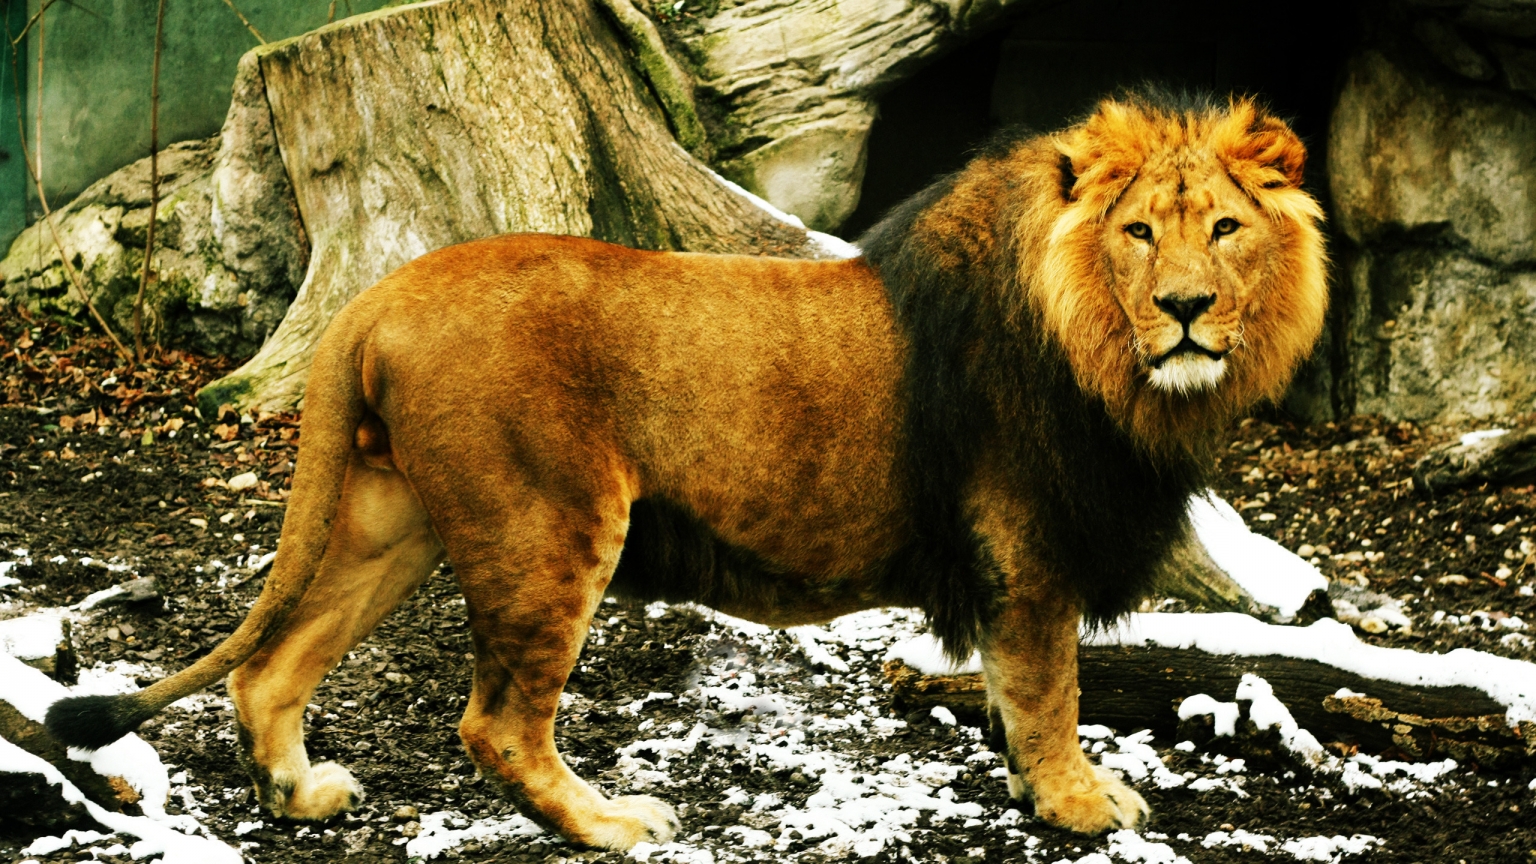 Lion King for 1536 x 864 HDTV resolution